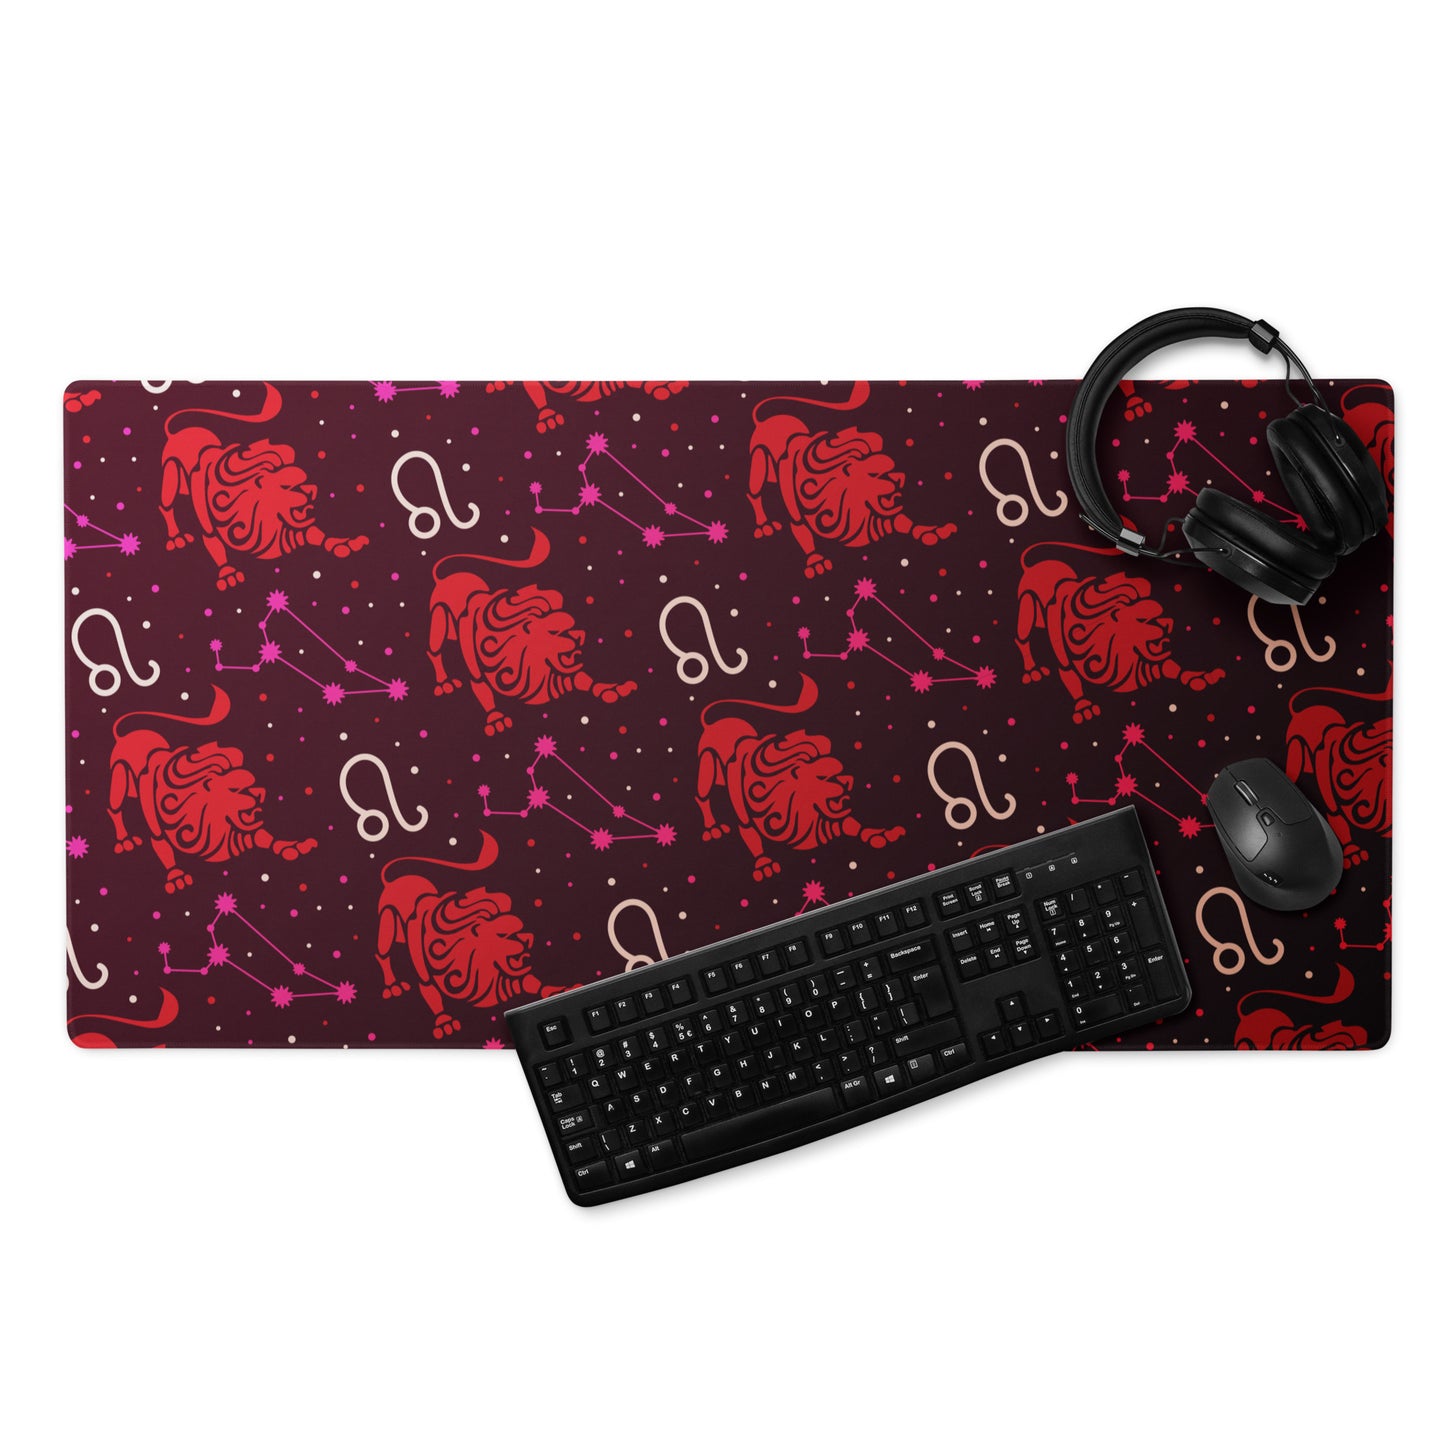 Leo Horoscope Gaming Mouse Pad/Battle Mat